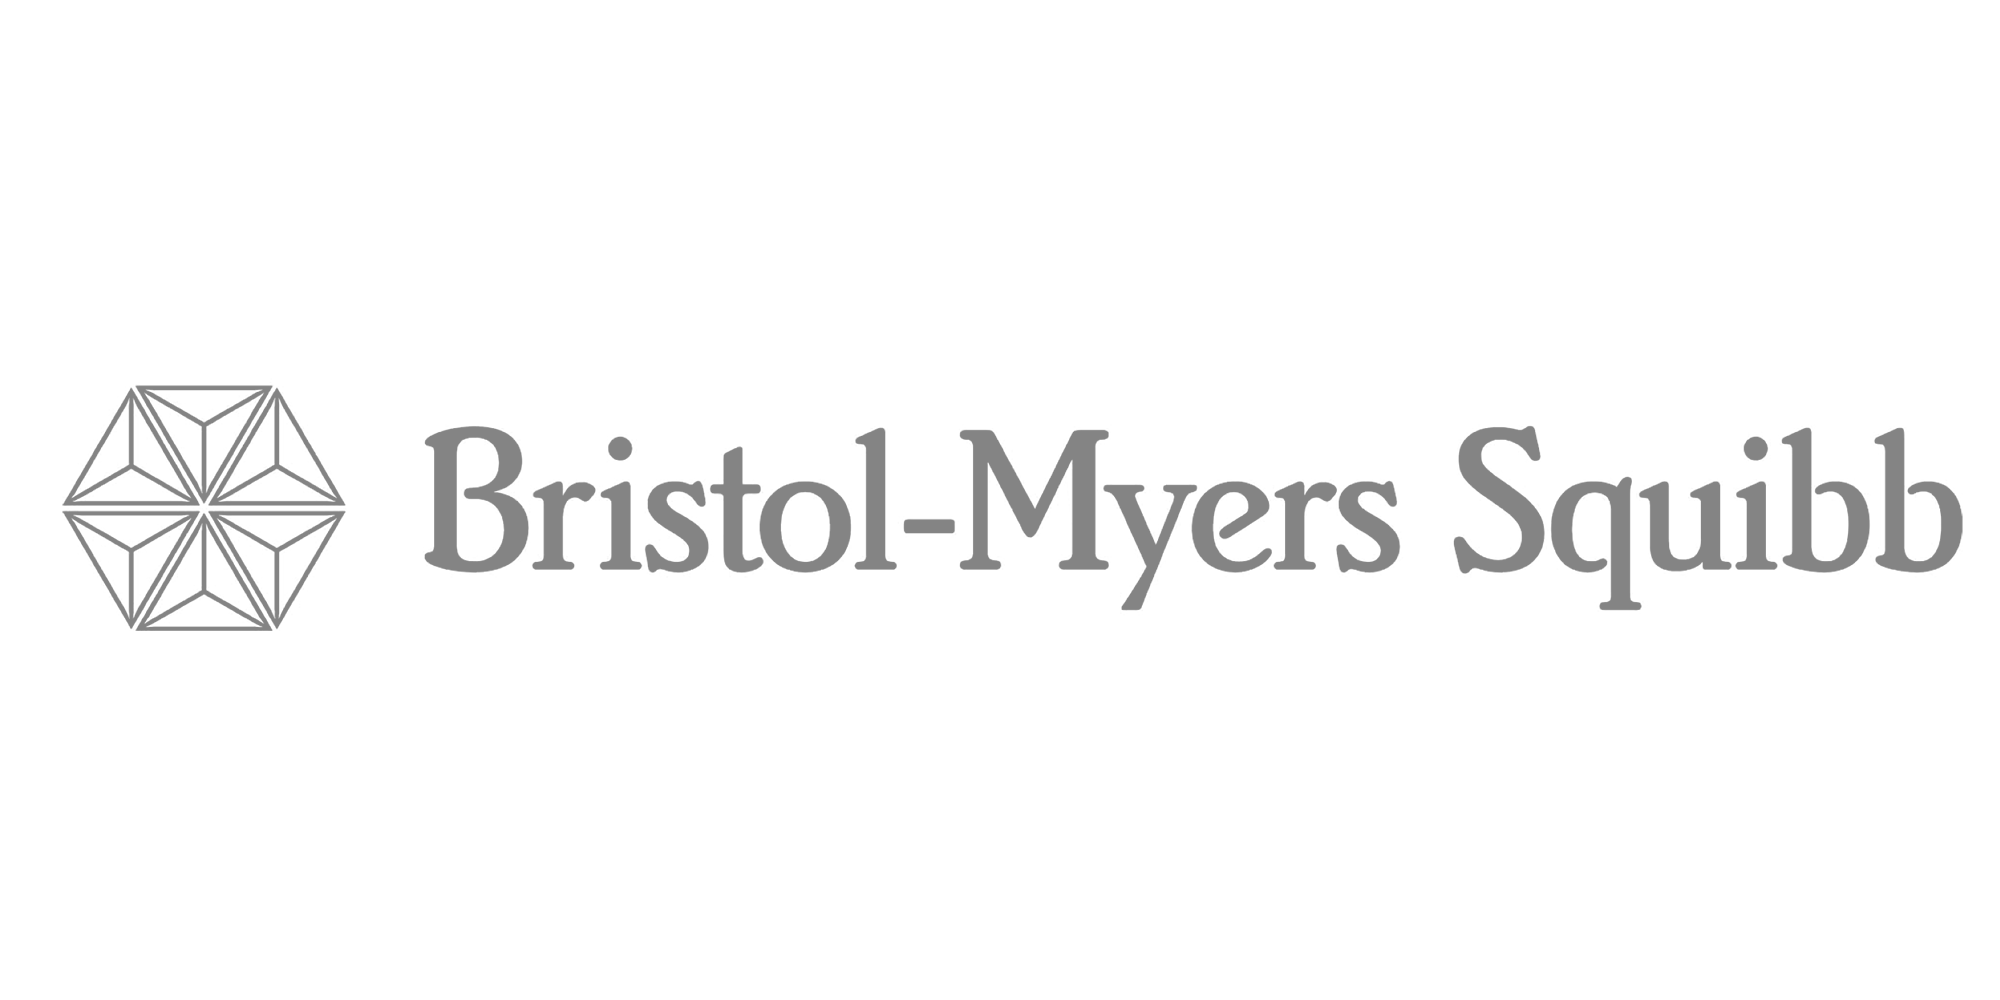 Bristol-Myers Squibb logo